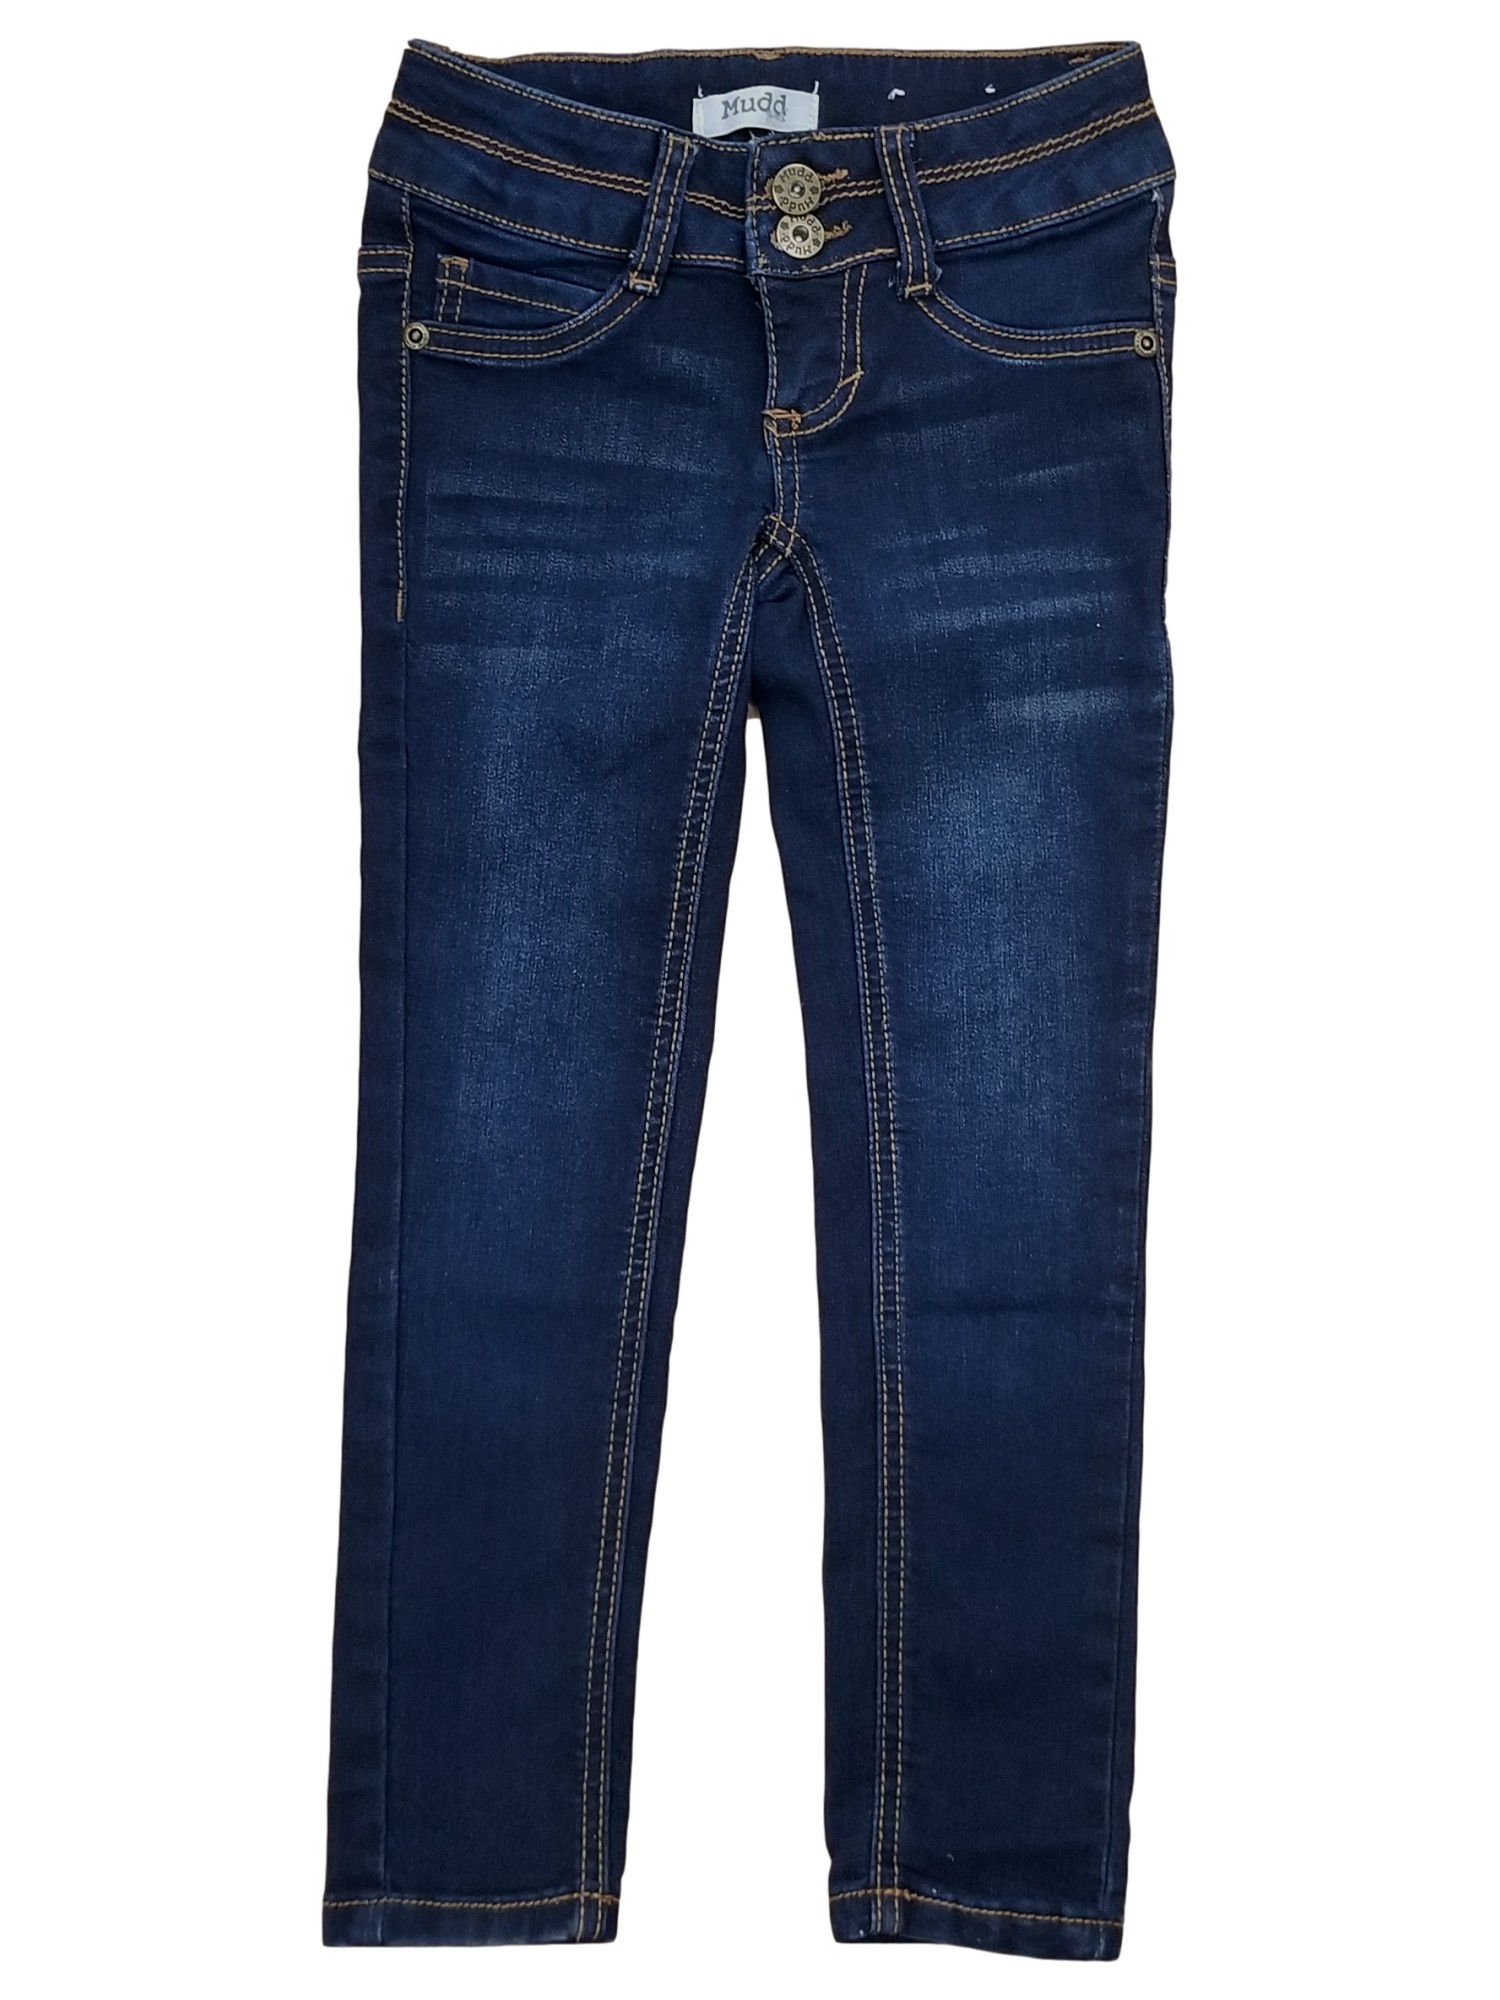 Mudd Girls Dark Navy Blue Denim Flex Stretch Cute Comfy Jeans Jeggings Pants 6